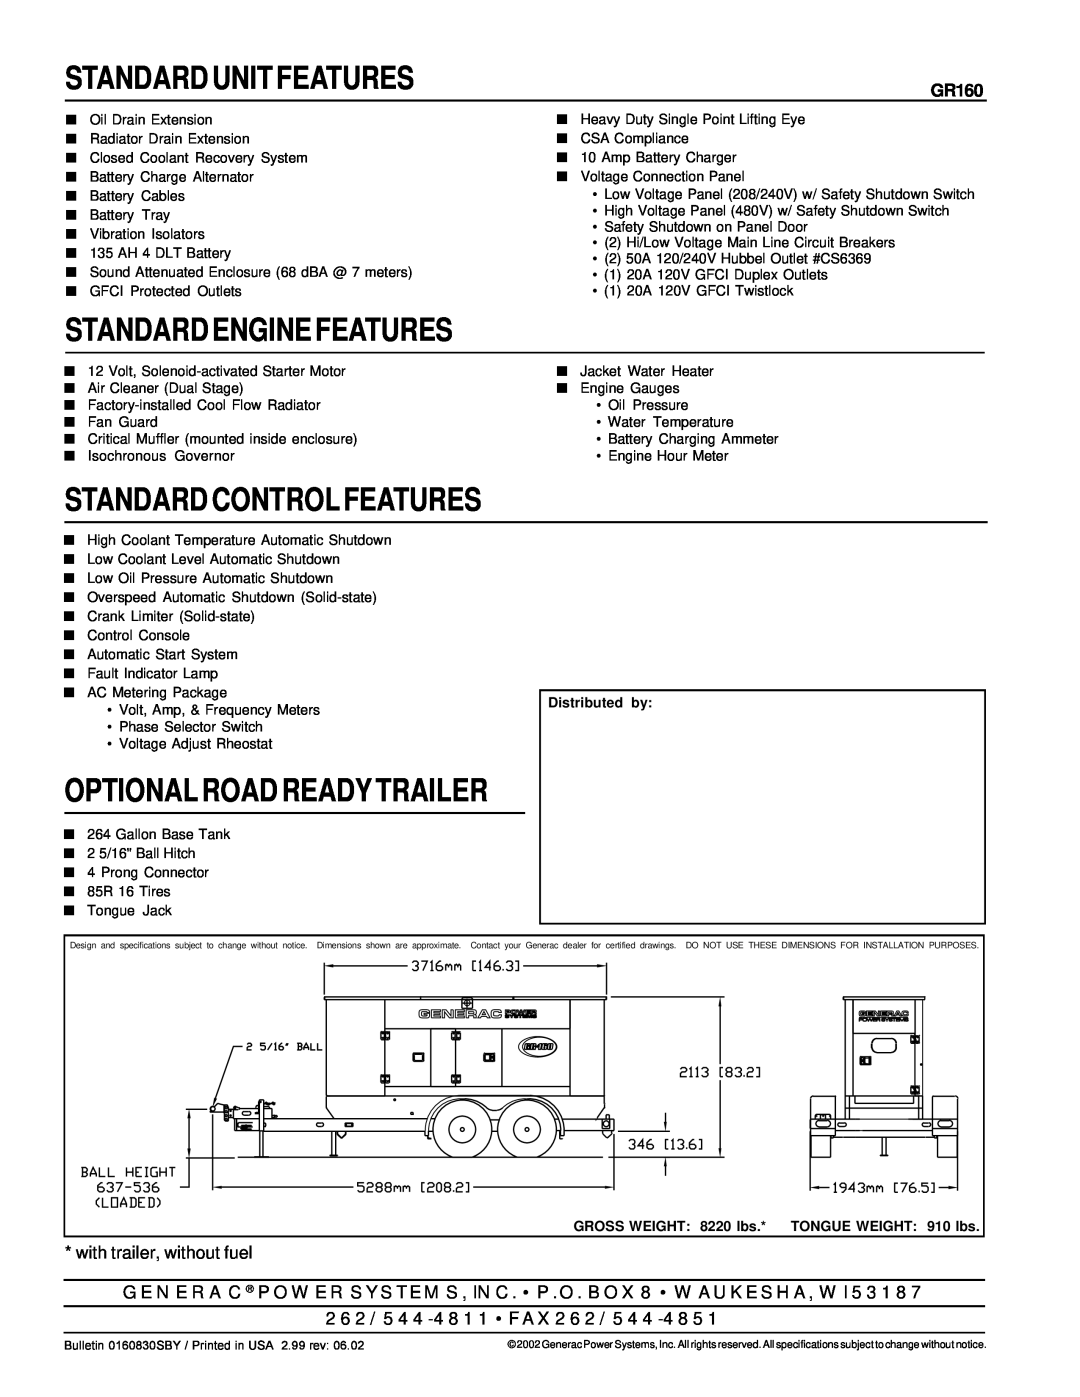 Generac GR160 Standard Unit Features, Standard Engine Features, Standard Control Features, Optional Road Ready Trailer 